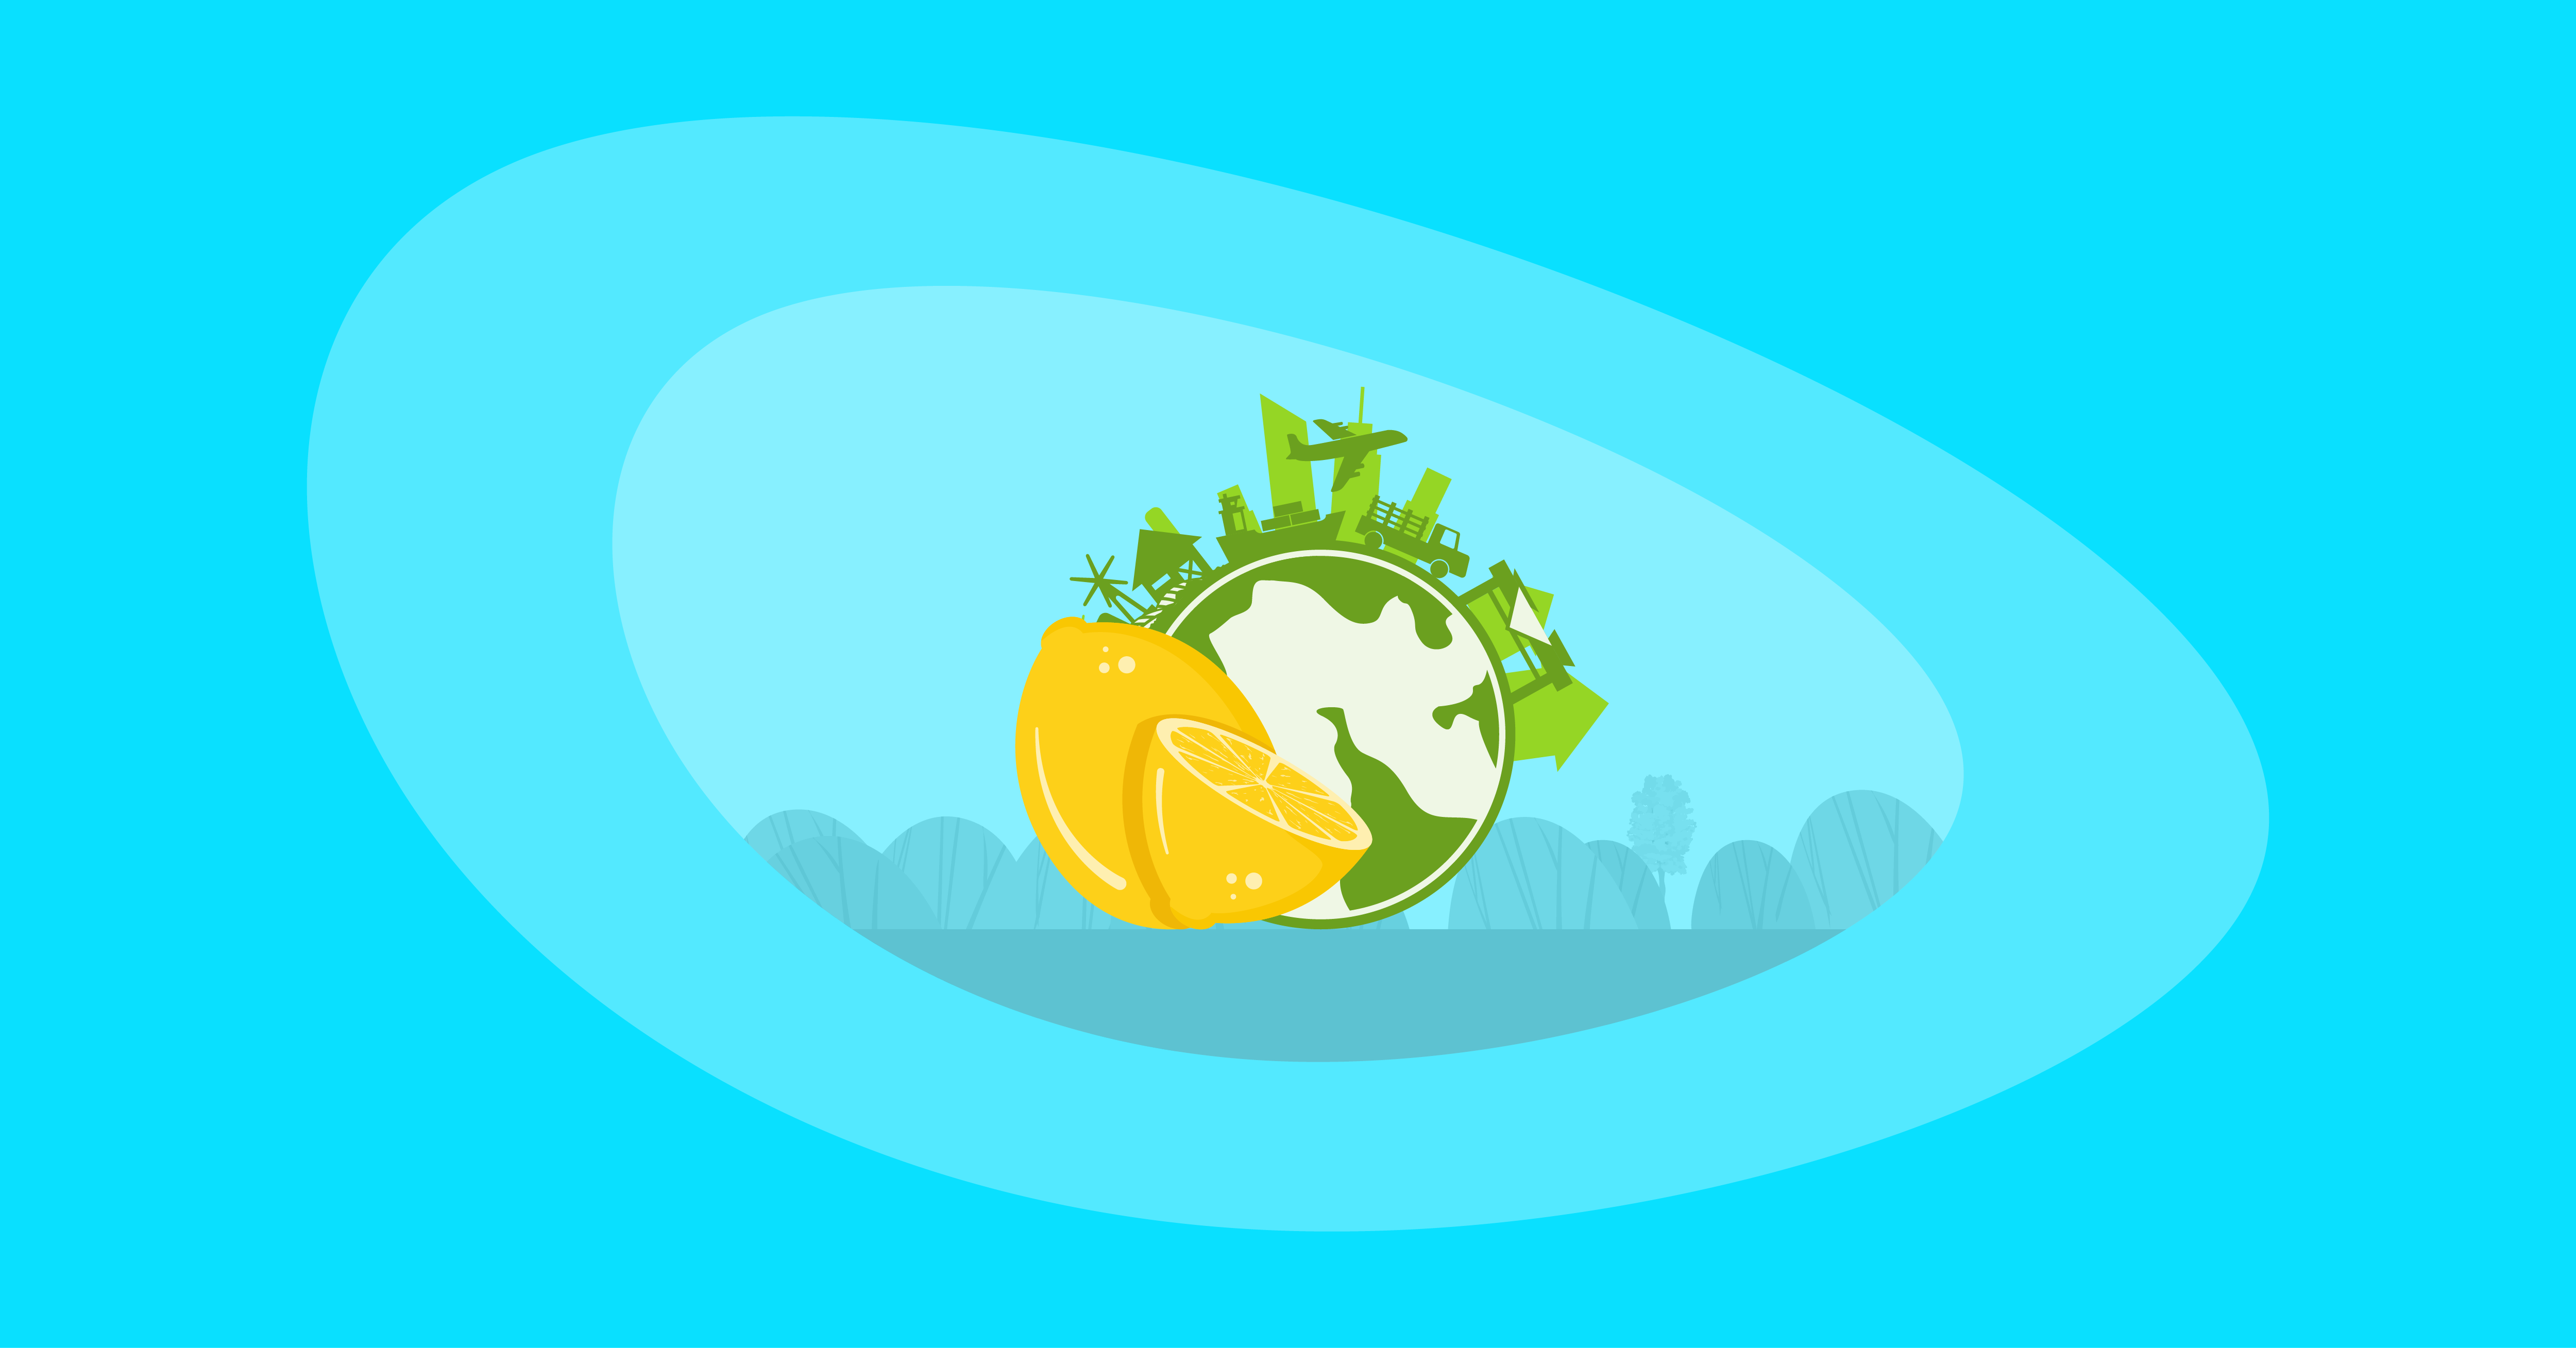 Illustration of lemons and their environmental impact